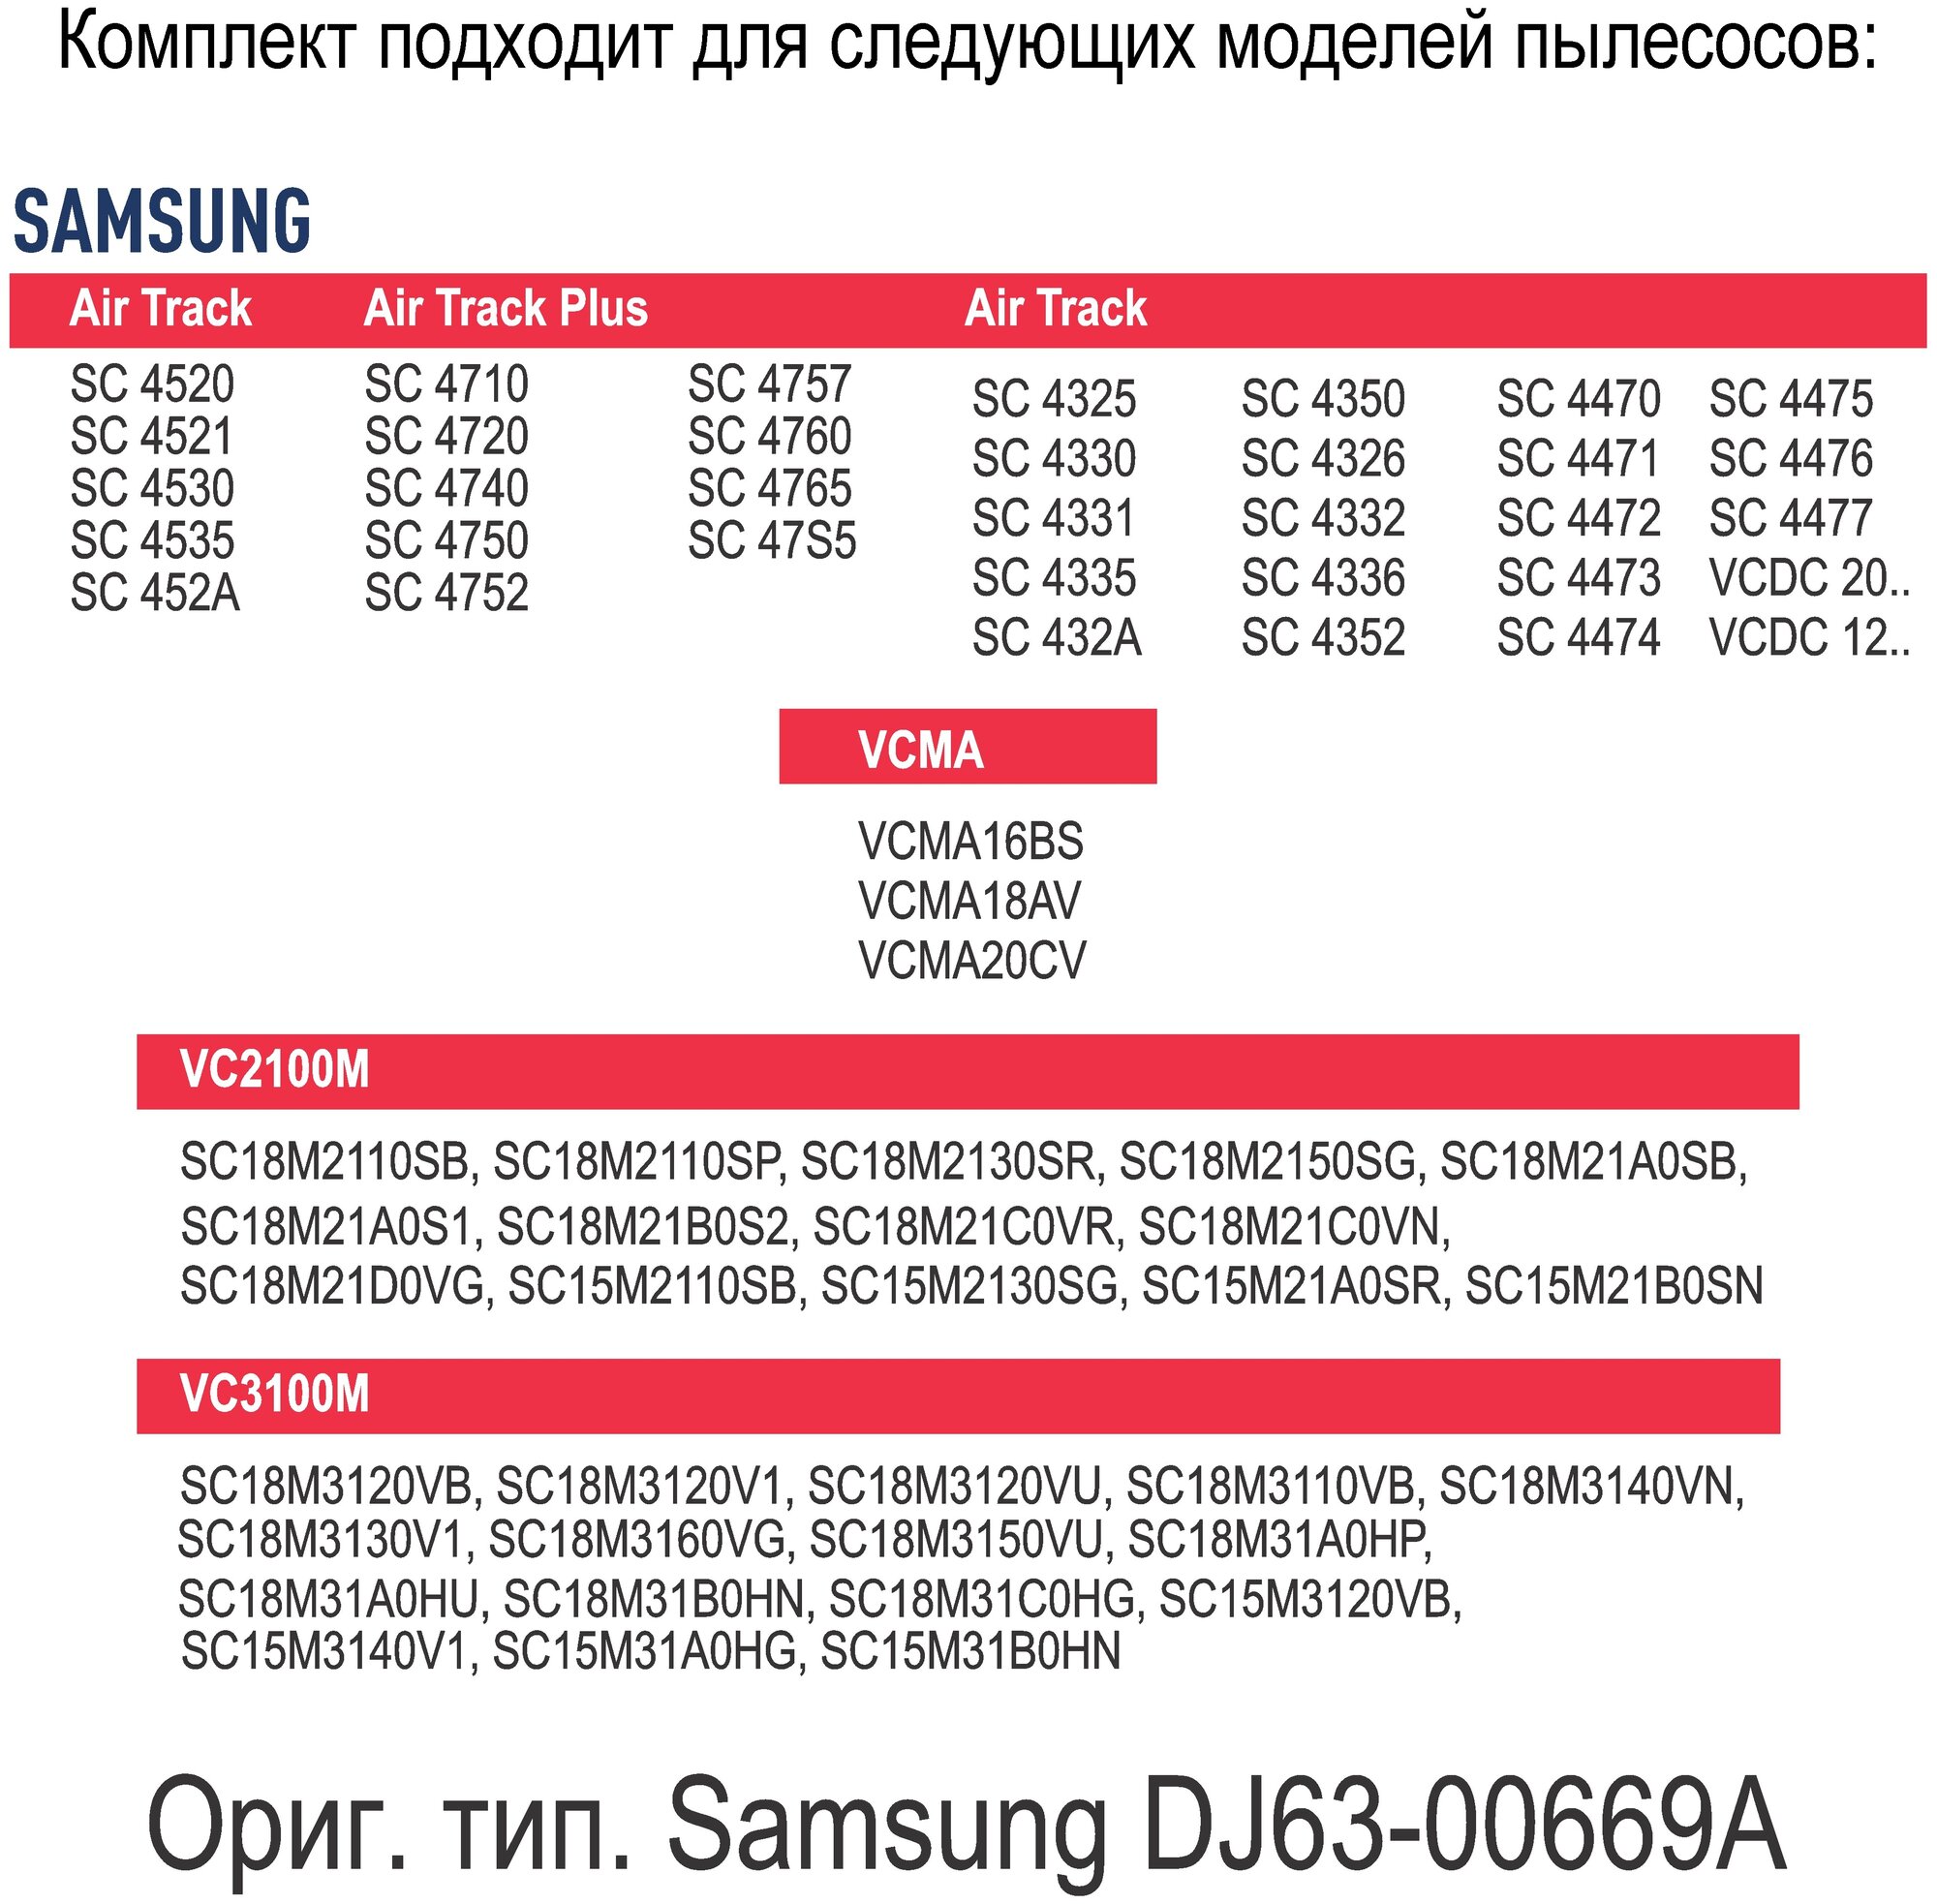 Набор фильтров TOPPERR , для пылесосов Samsung серии Air Track, Air Track Plus, VCMA, VC2100M, VC3100M - фото №6